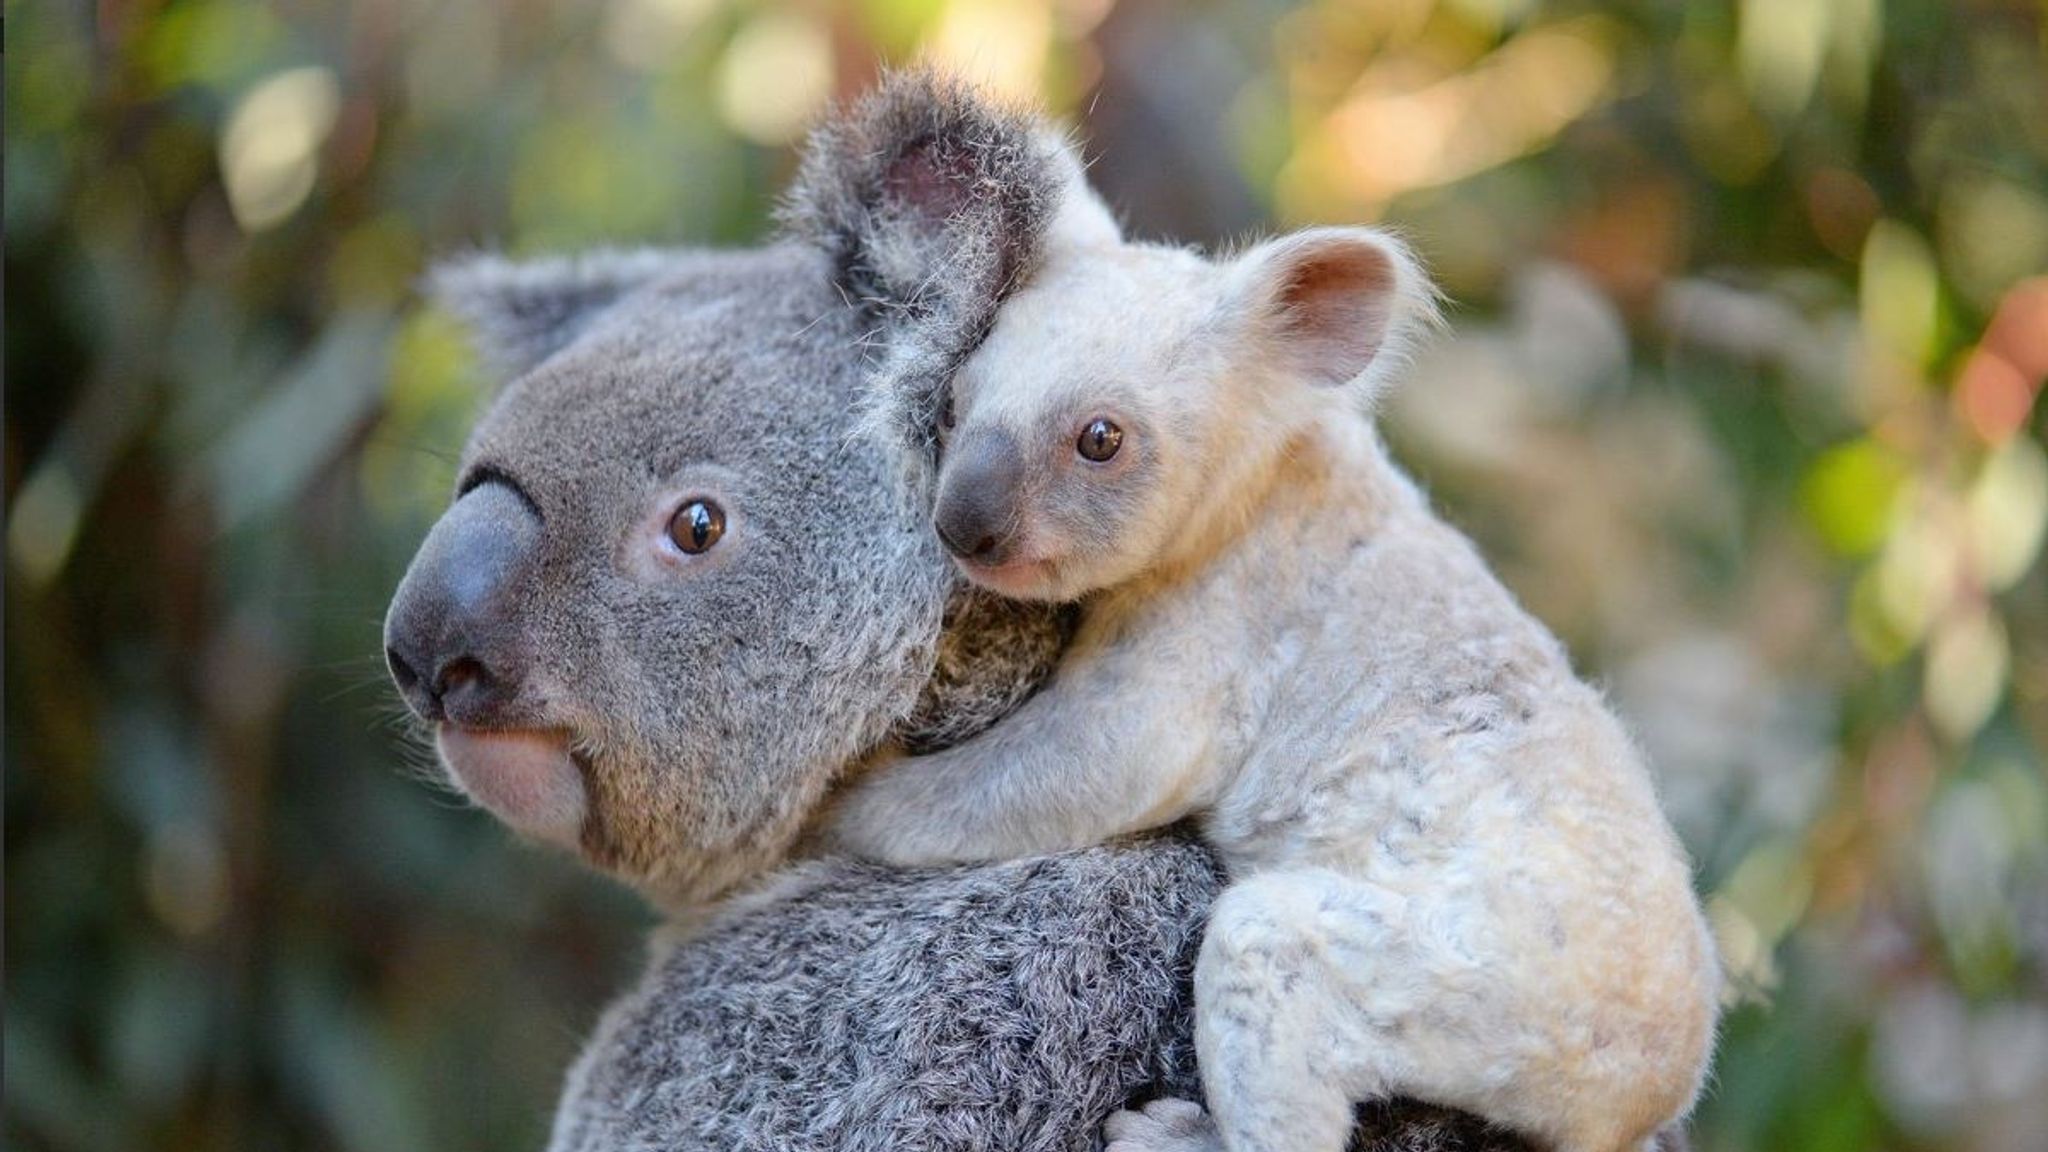 Baby koala born at Miami Zoo, named 'Hope' to show support for Australian  wildlifes